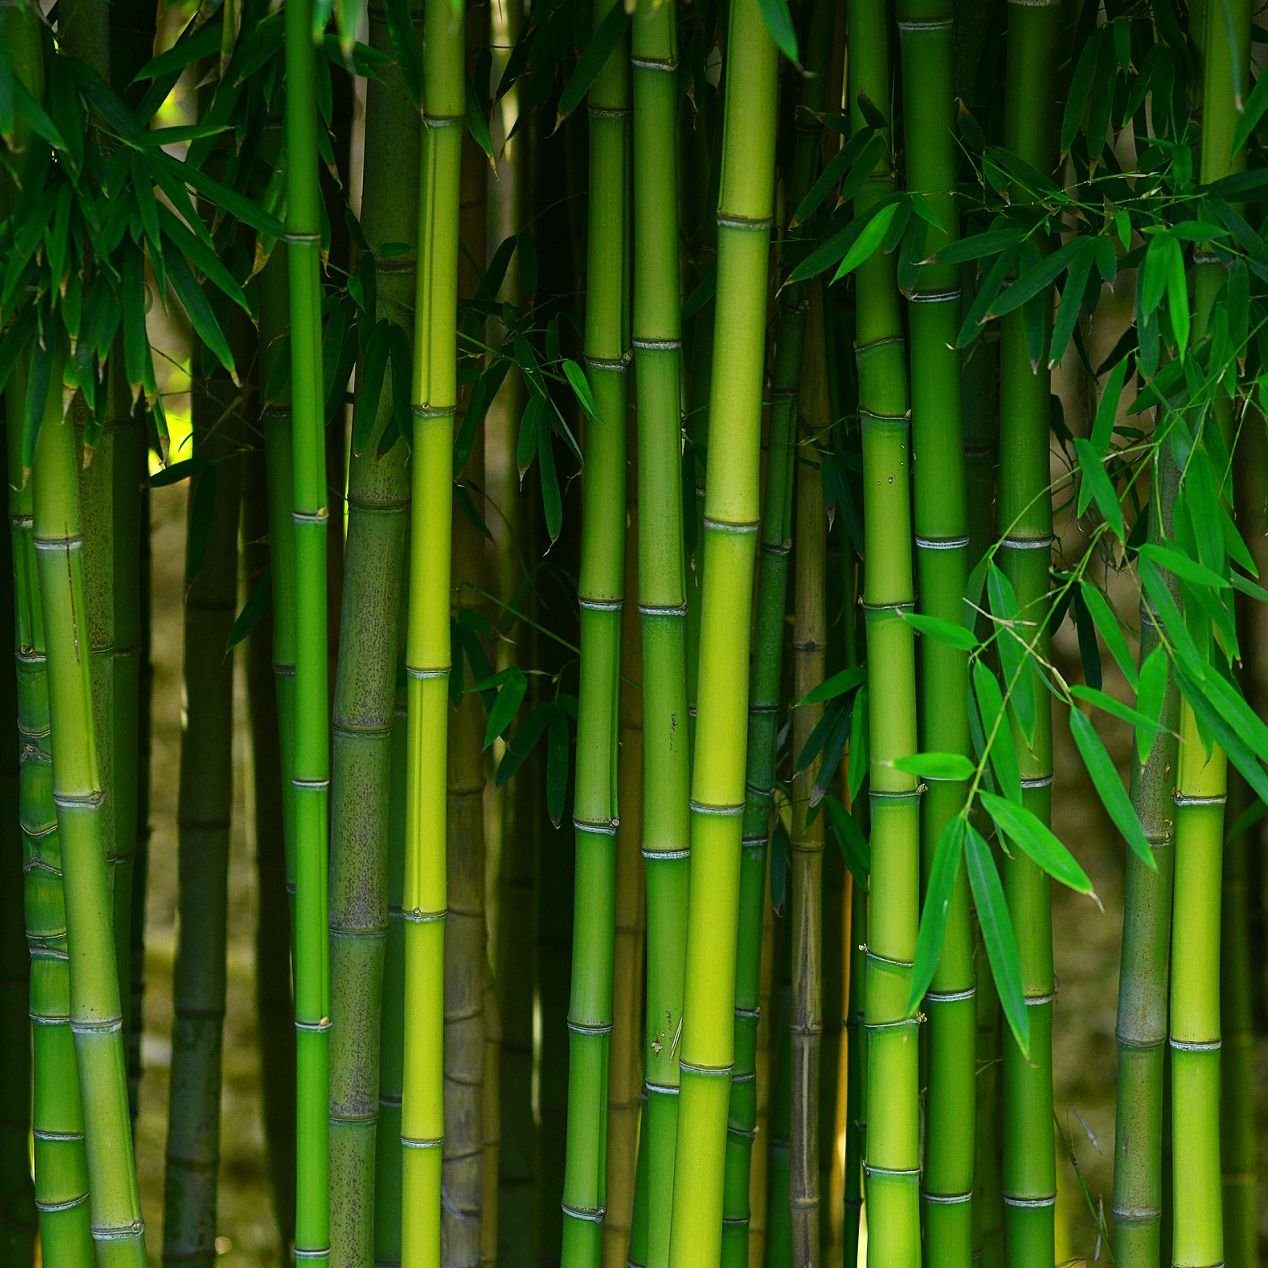 Bamboo from Carpet Studio & Design Inc. in Los Angeles, CA